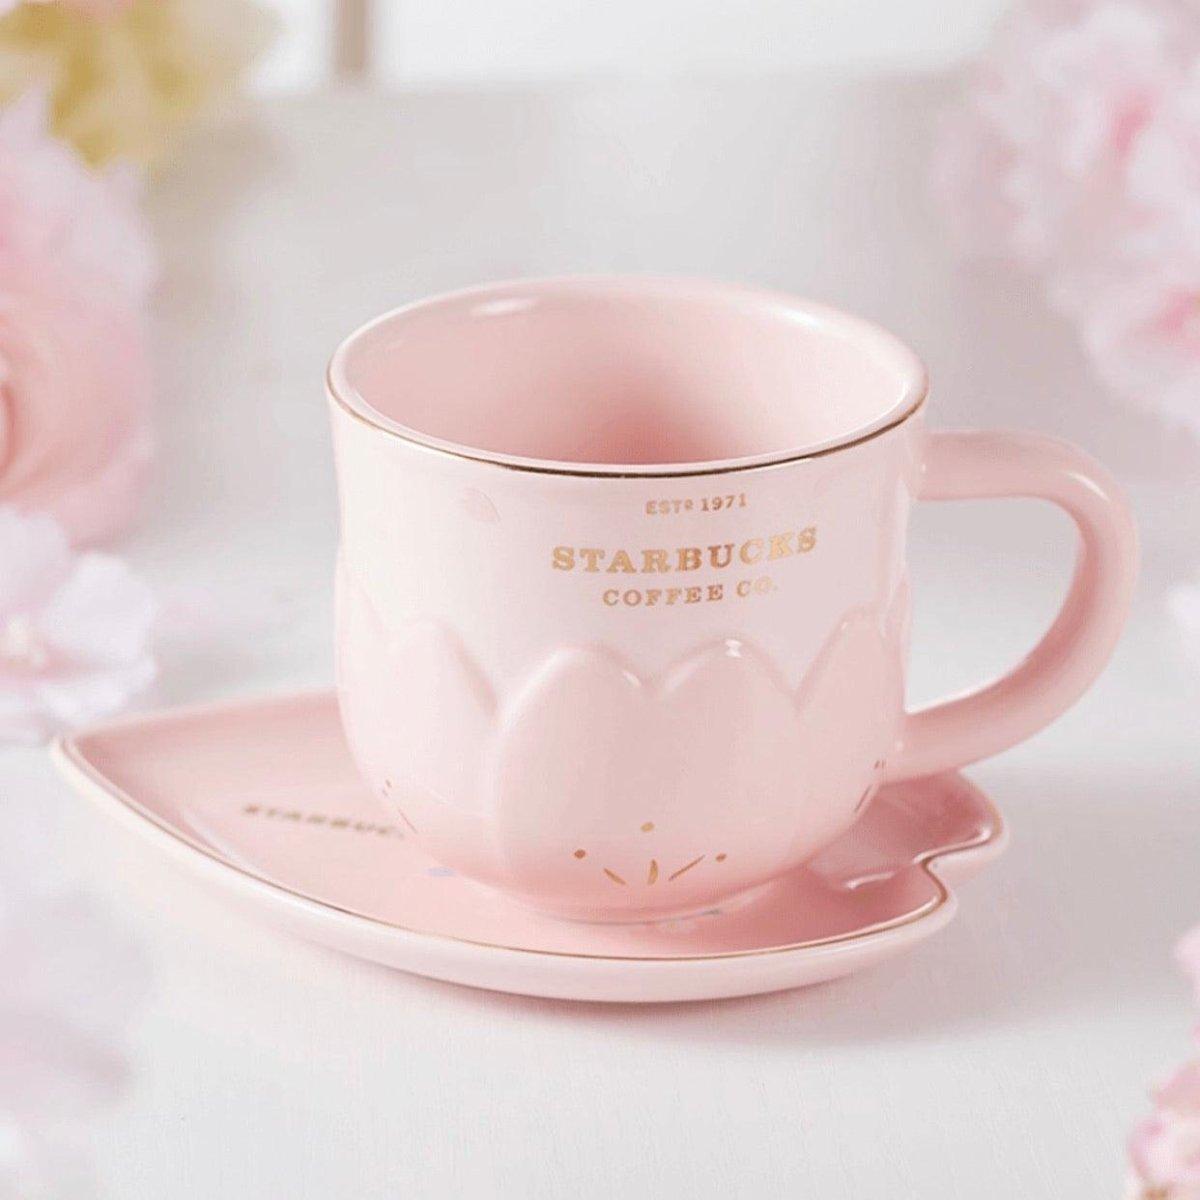 Pink Sakura Petal Ceramic Cup with Bird Petal Shaped Plate 280ml/9,47oz - Ann Ann Starbucks